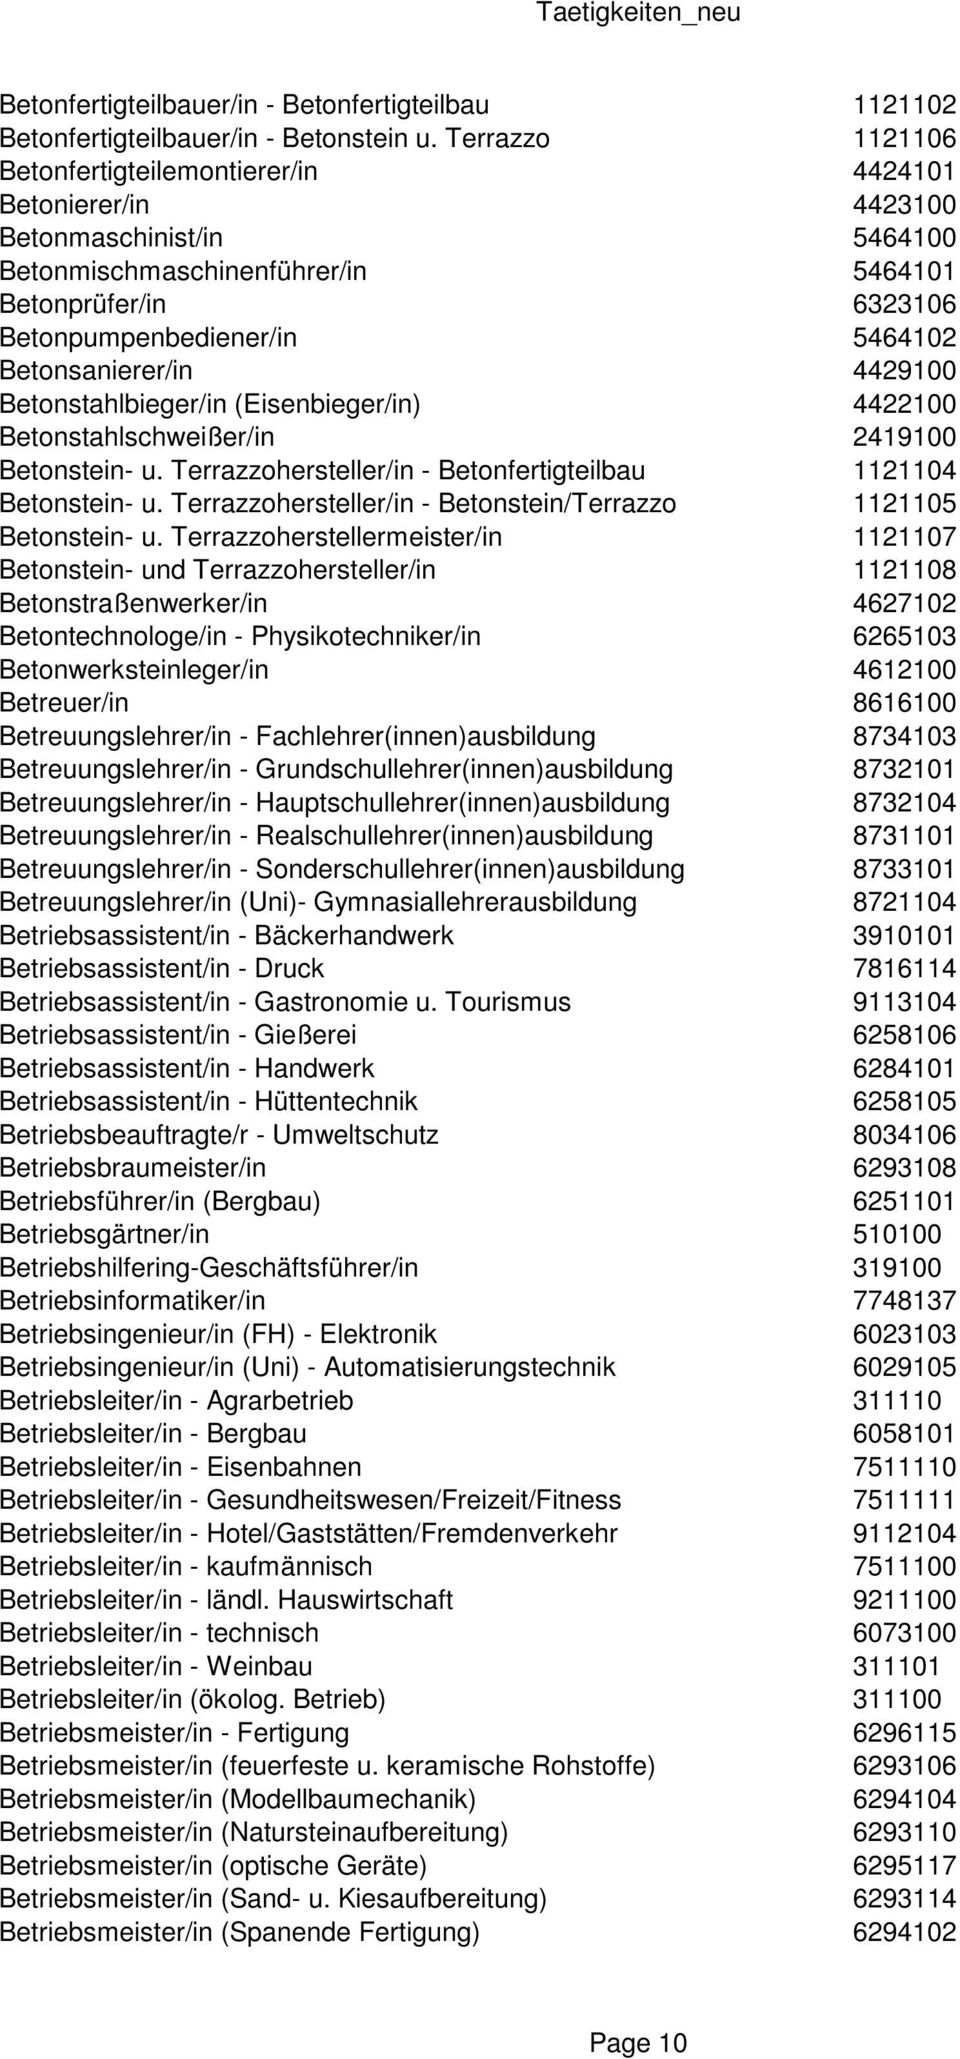 Betonsanierer/in 4429100 Betonstahlbieger/in (Eisenbieger/in) 4422100 Betonstahlschweißer/in 2419100 Betonstein- u. Terrazzohersteller/in - Betonfertigteilbau 1121104 Betonstein- u.